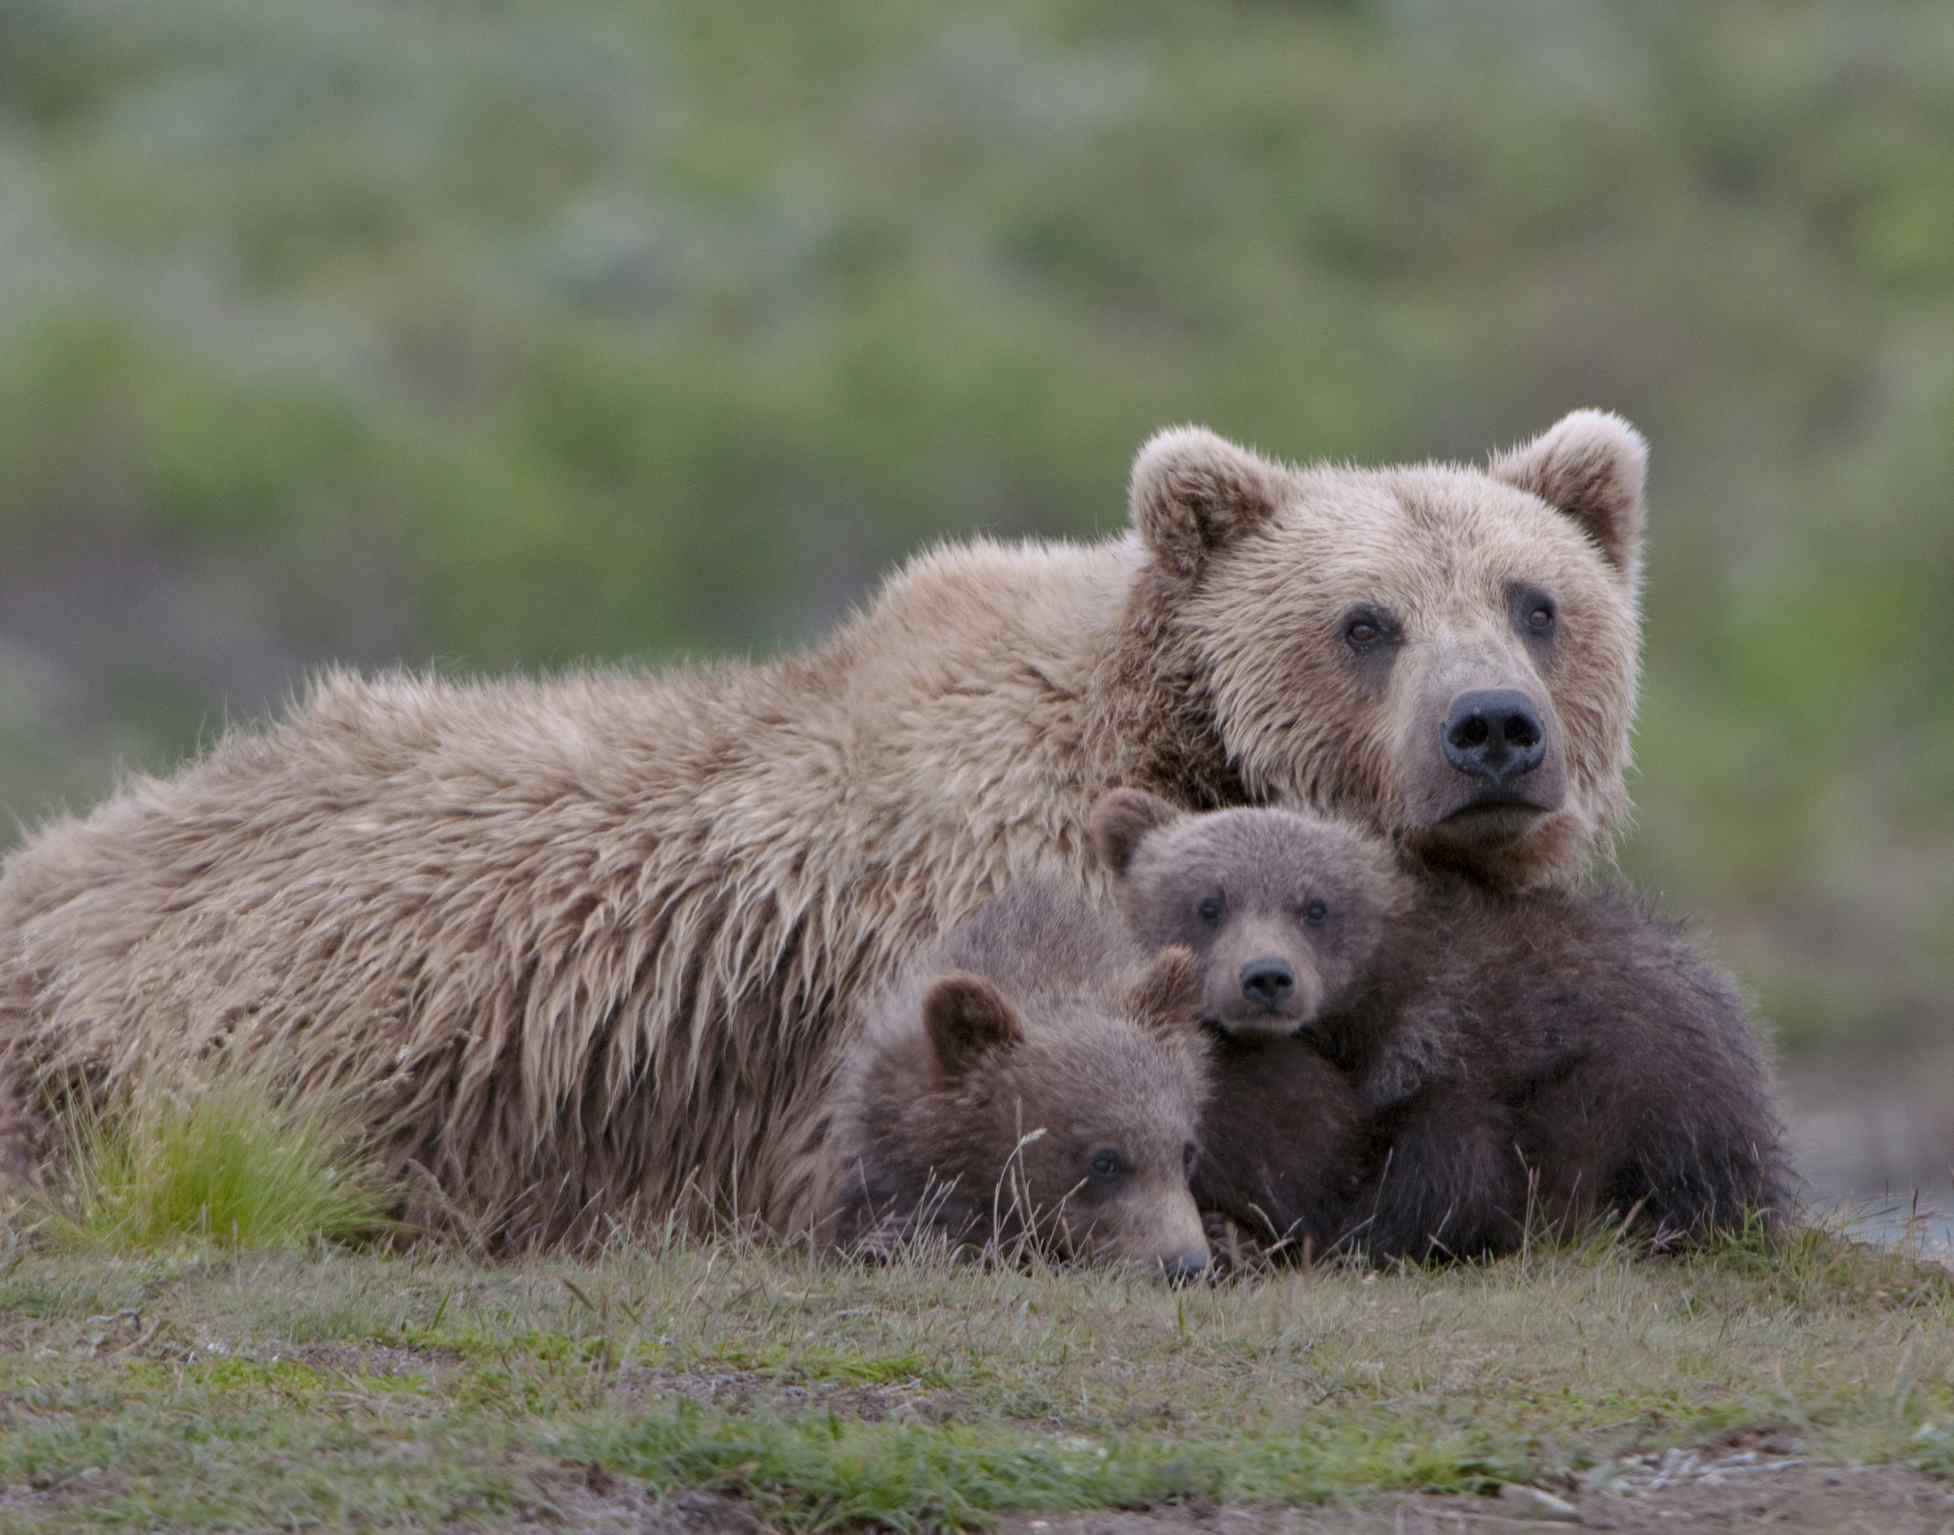 Bears, Denali, Alaska
Getty: 177407325